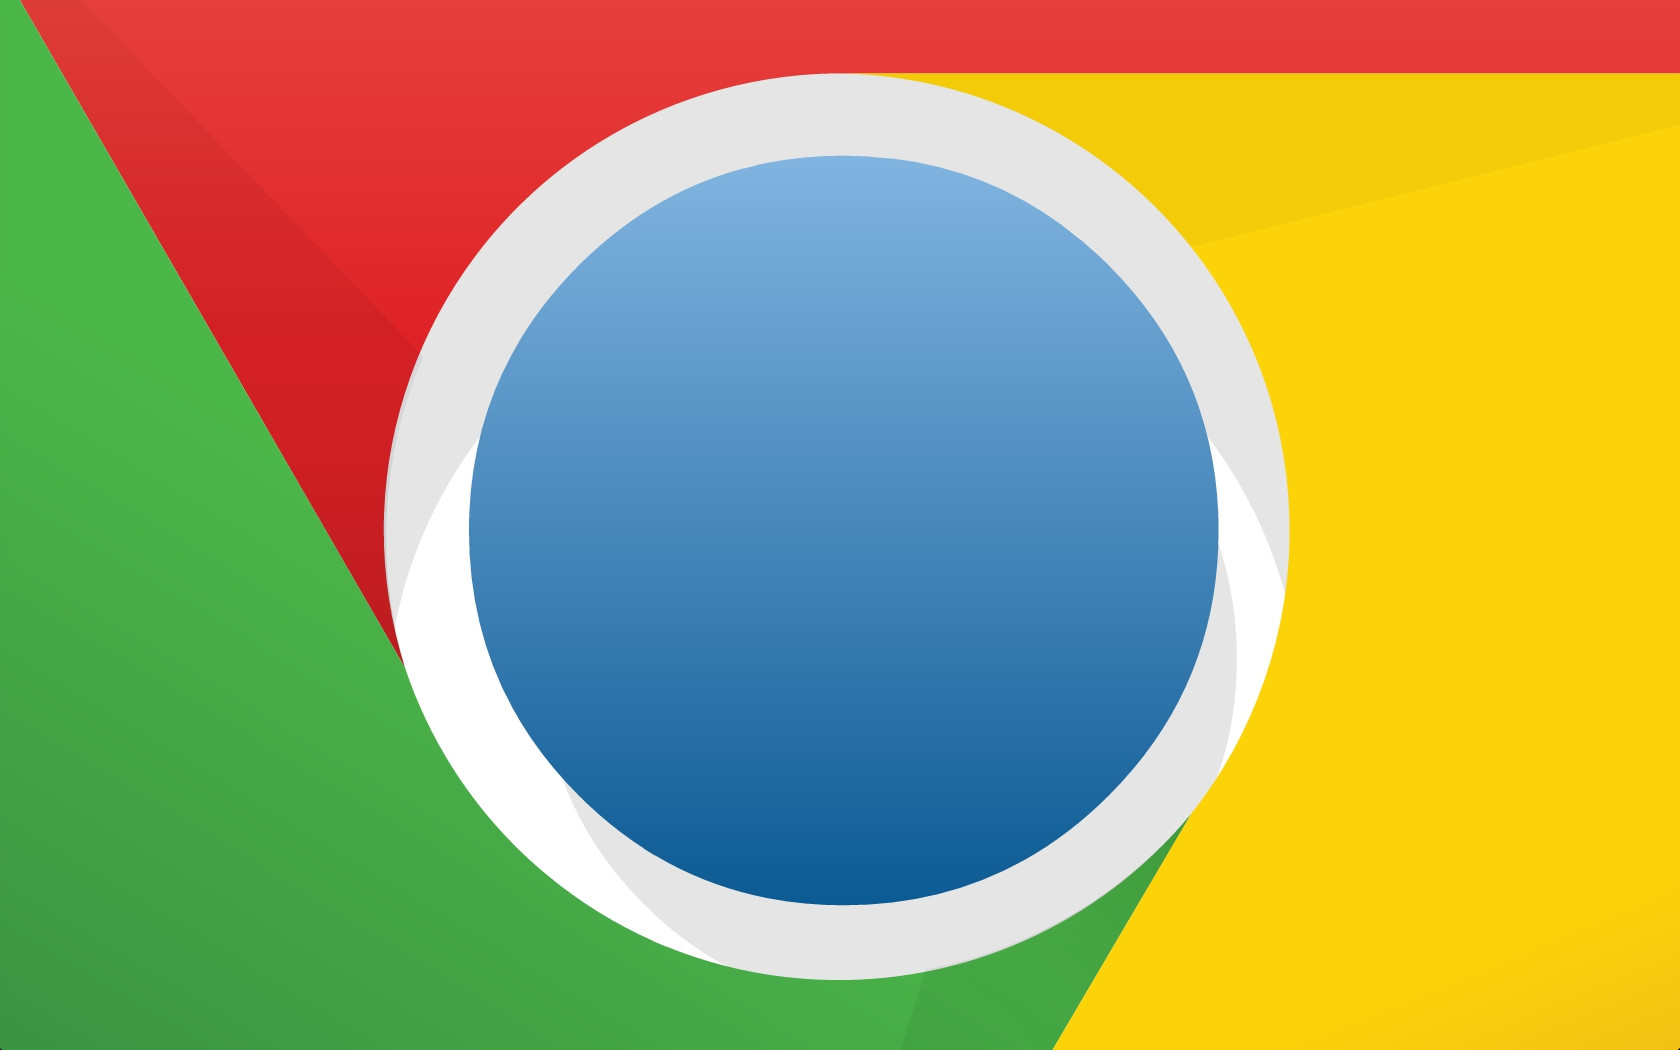 Google Chrome recibirá un bloqueador de publicidad